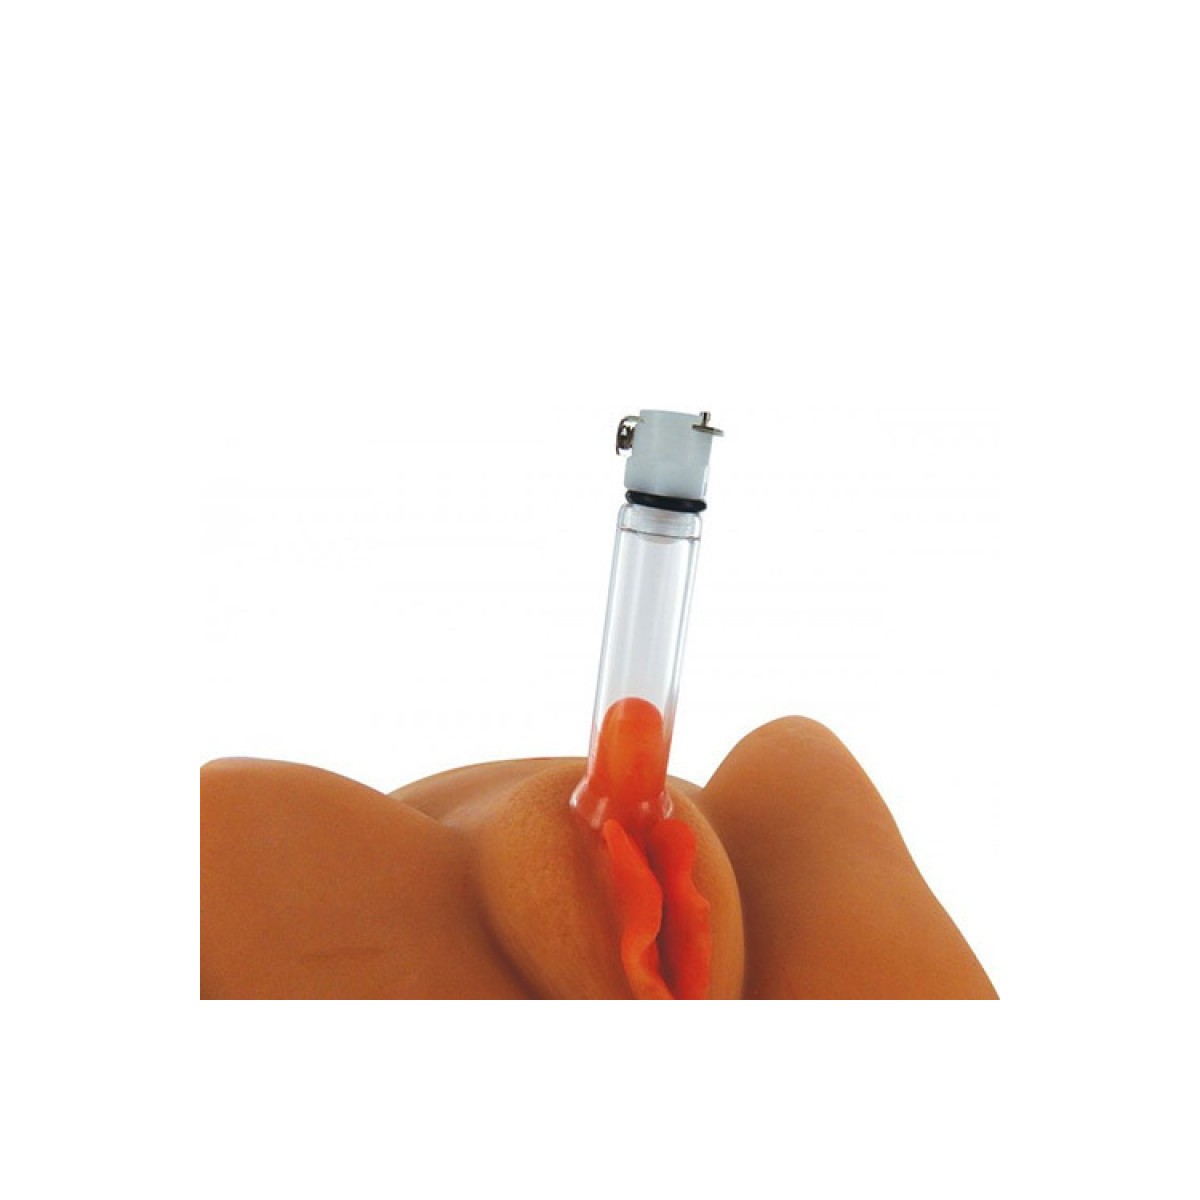 Pompa clitoridea clitoral pumping system